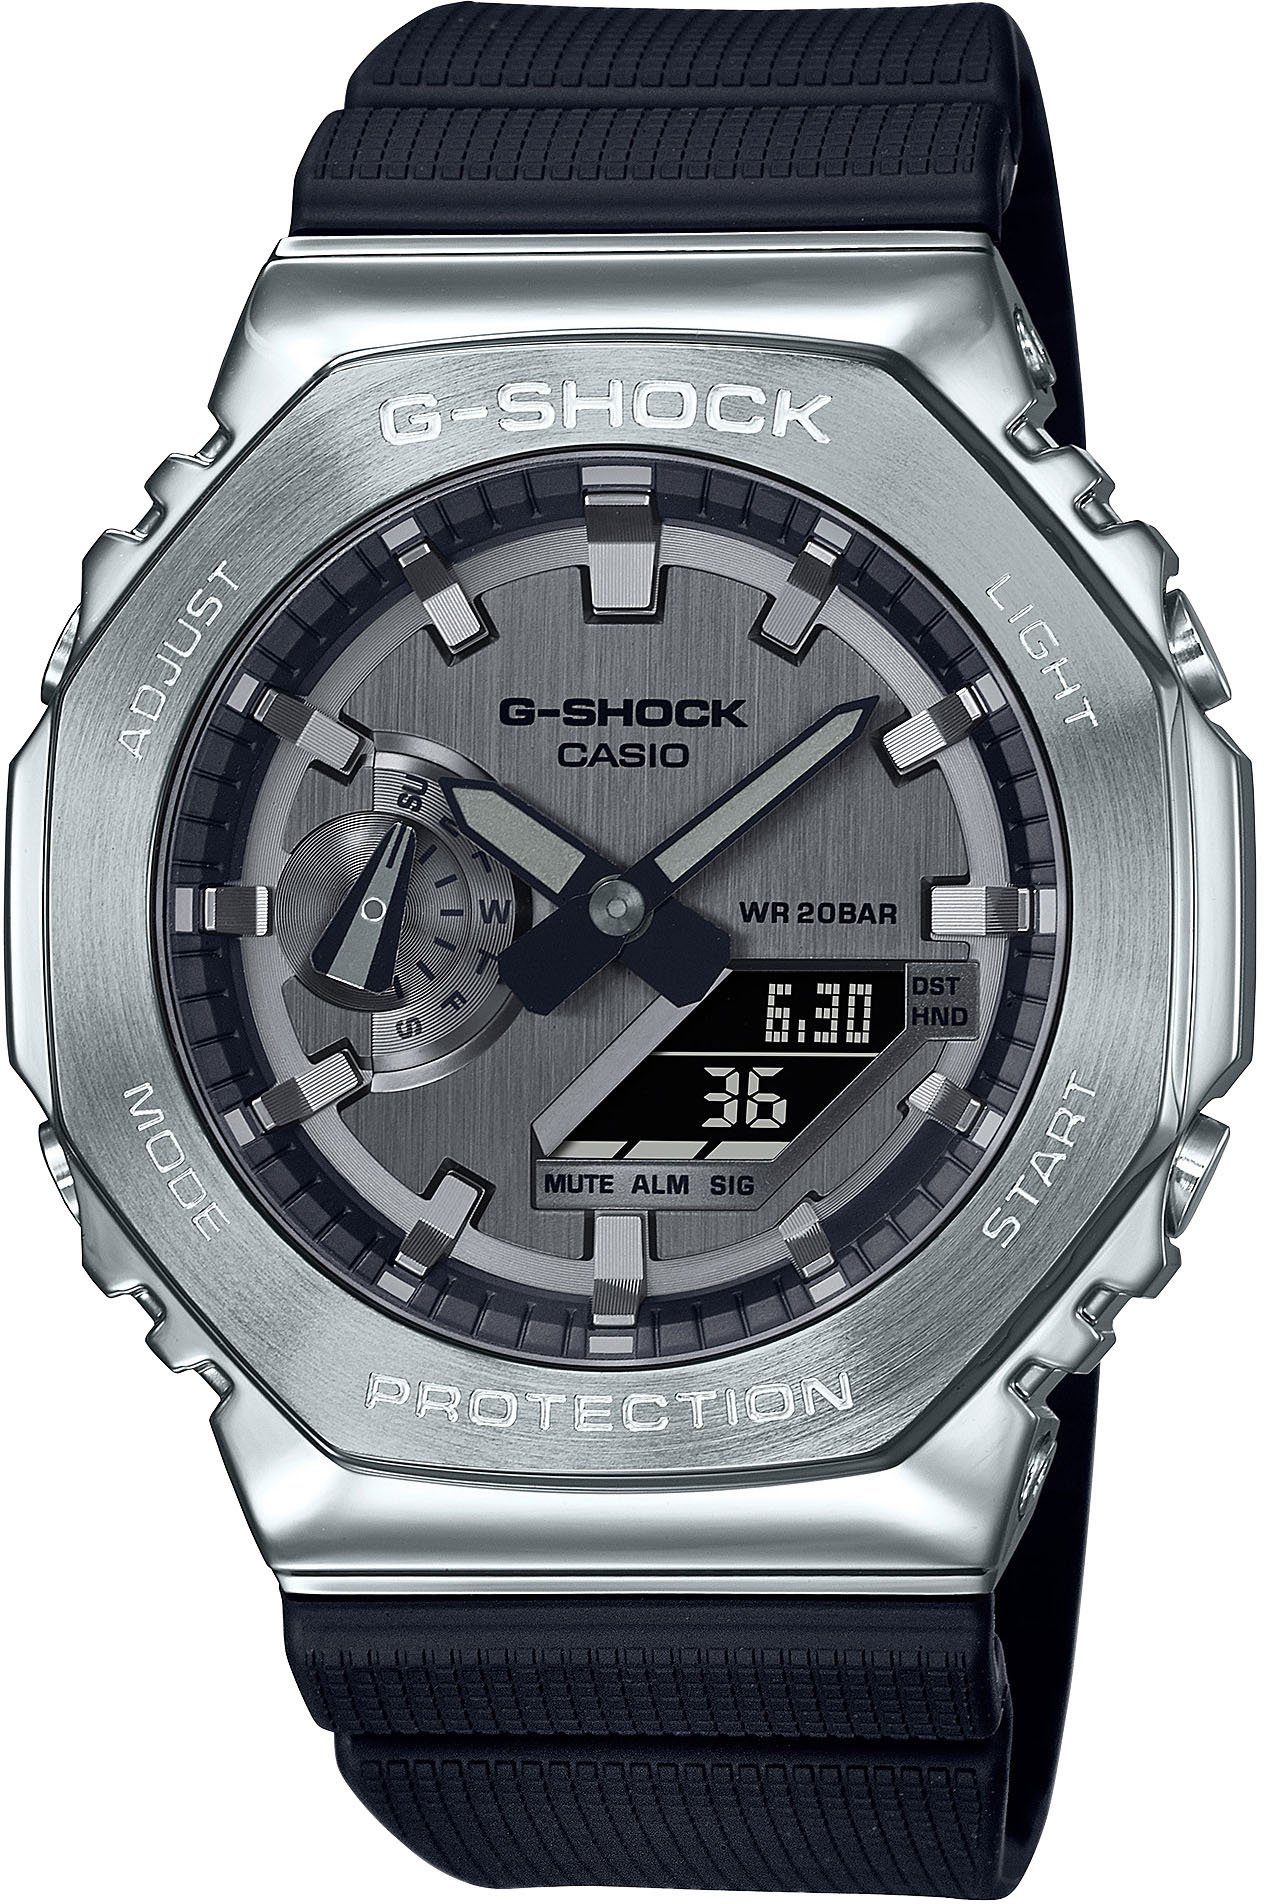 Chronograph GM-2100-1AER G-SHOCK CASIO